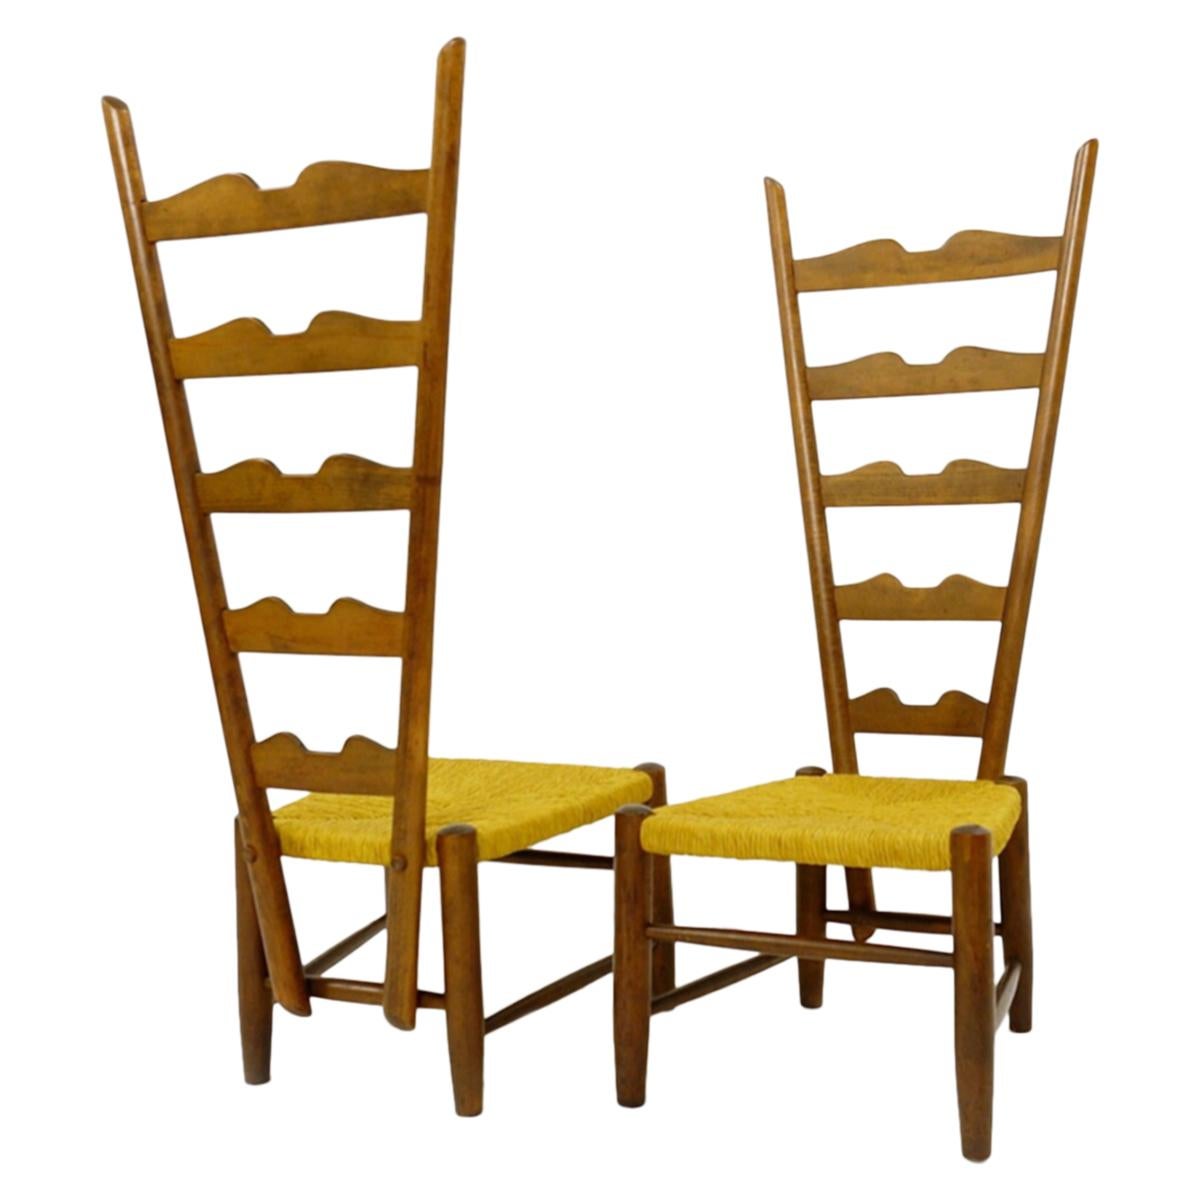 Pair of Chairs by Gio Ponti for Casa E Giardino, Milan, Italy, Circa 1939